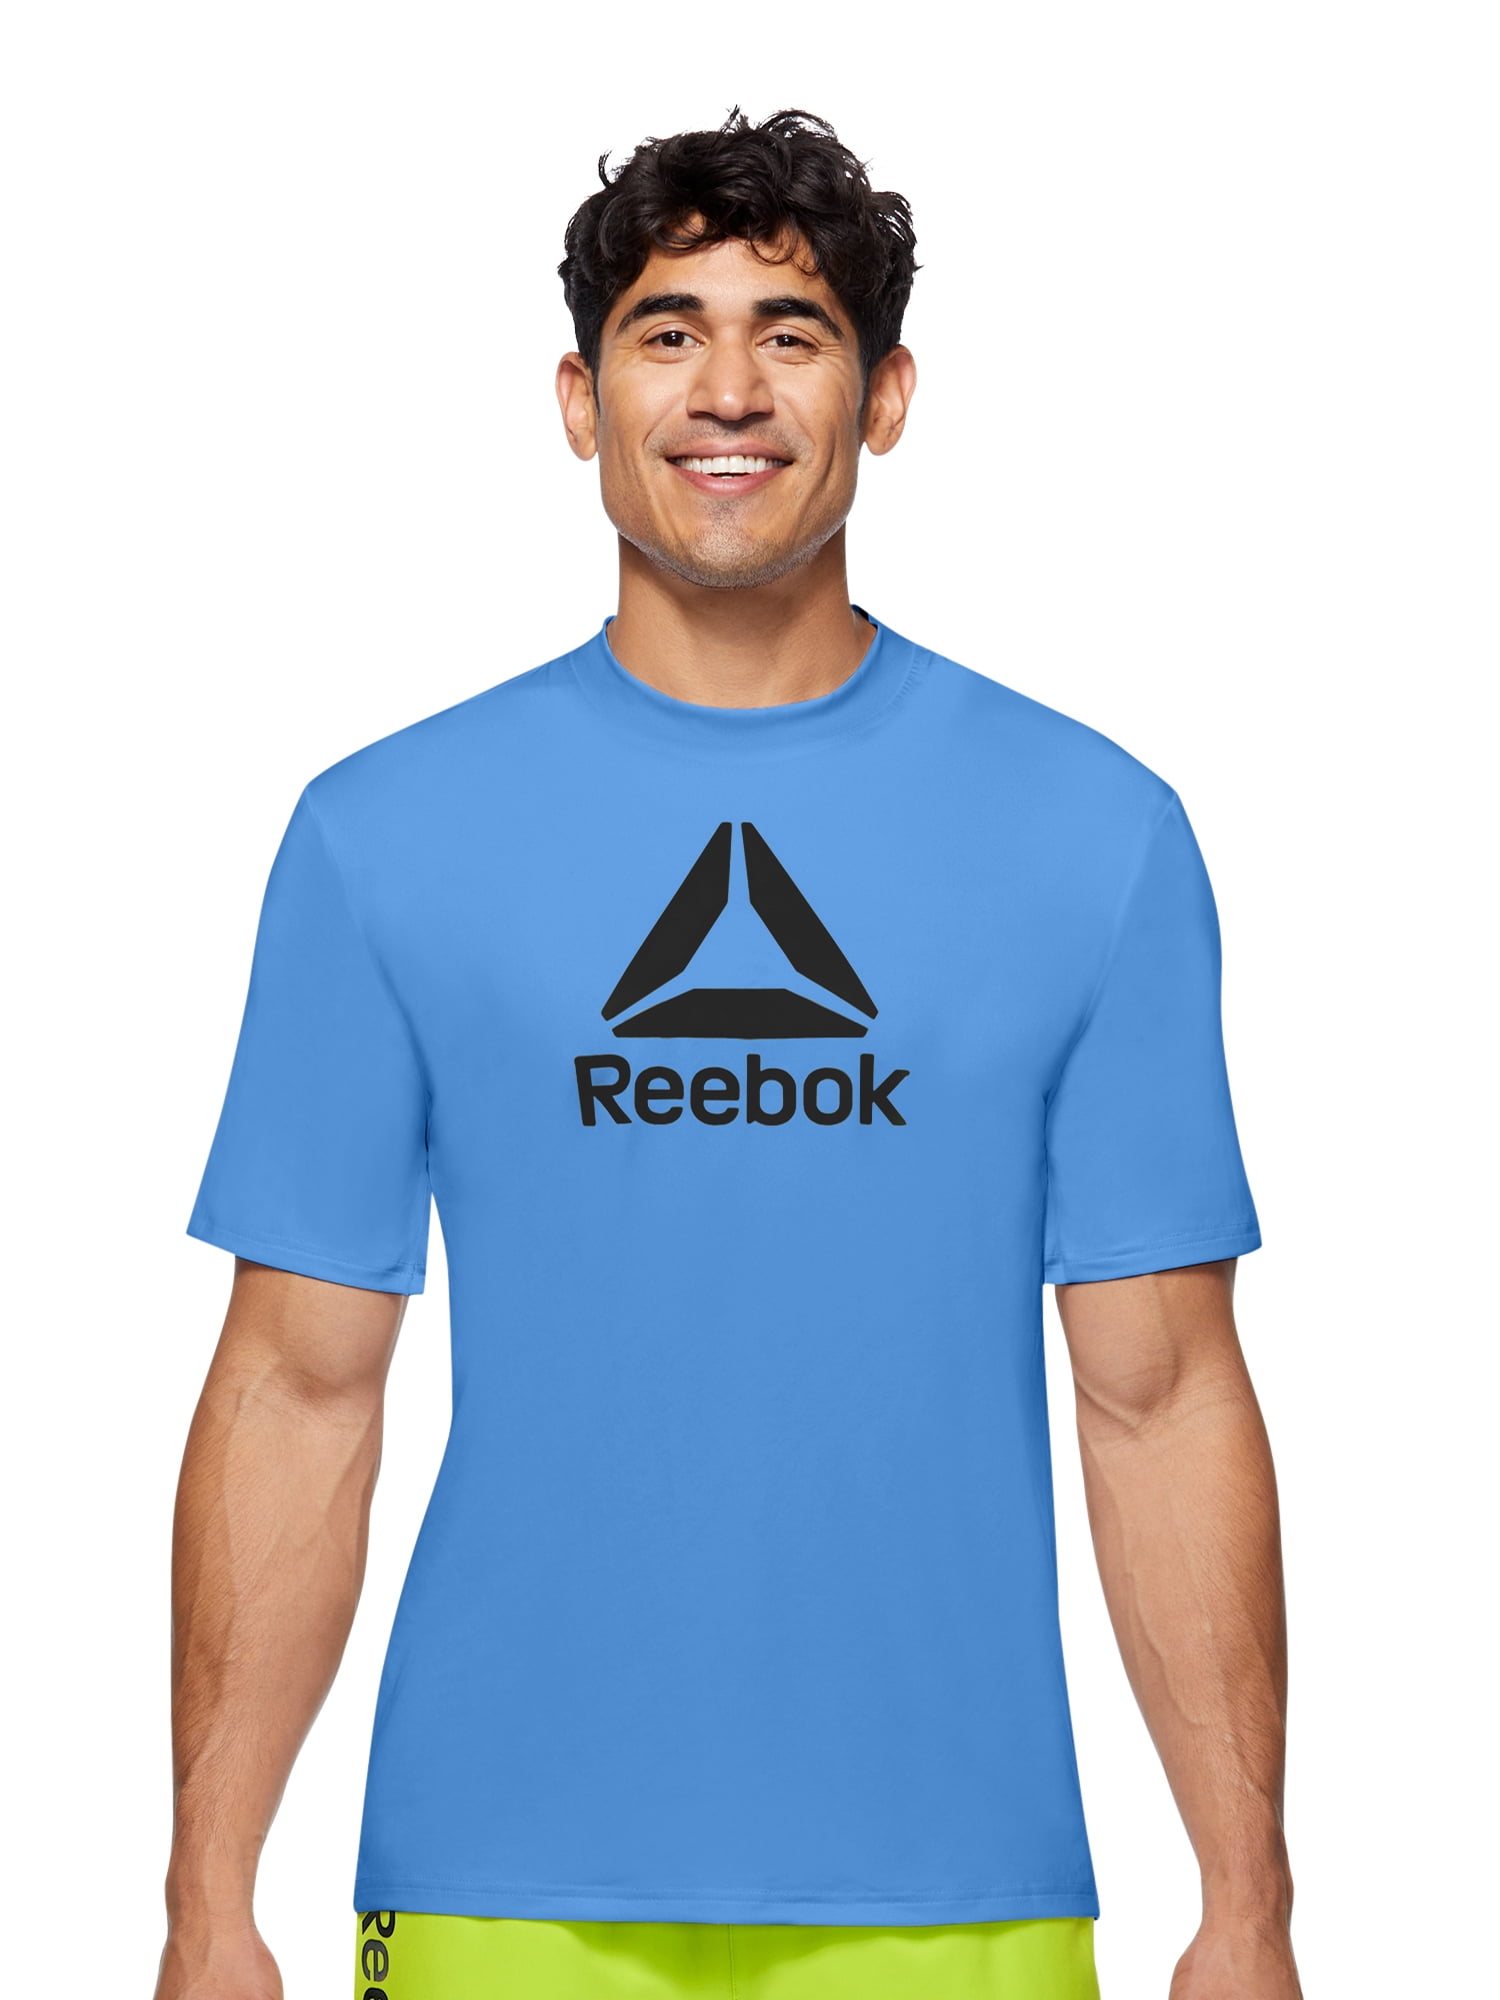 Reebok Men's Short Sleeve Logo Rash Guard with UPF 50+, Sizes S-XXL